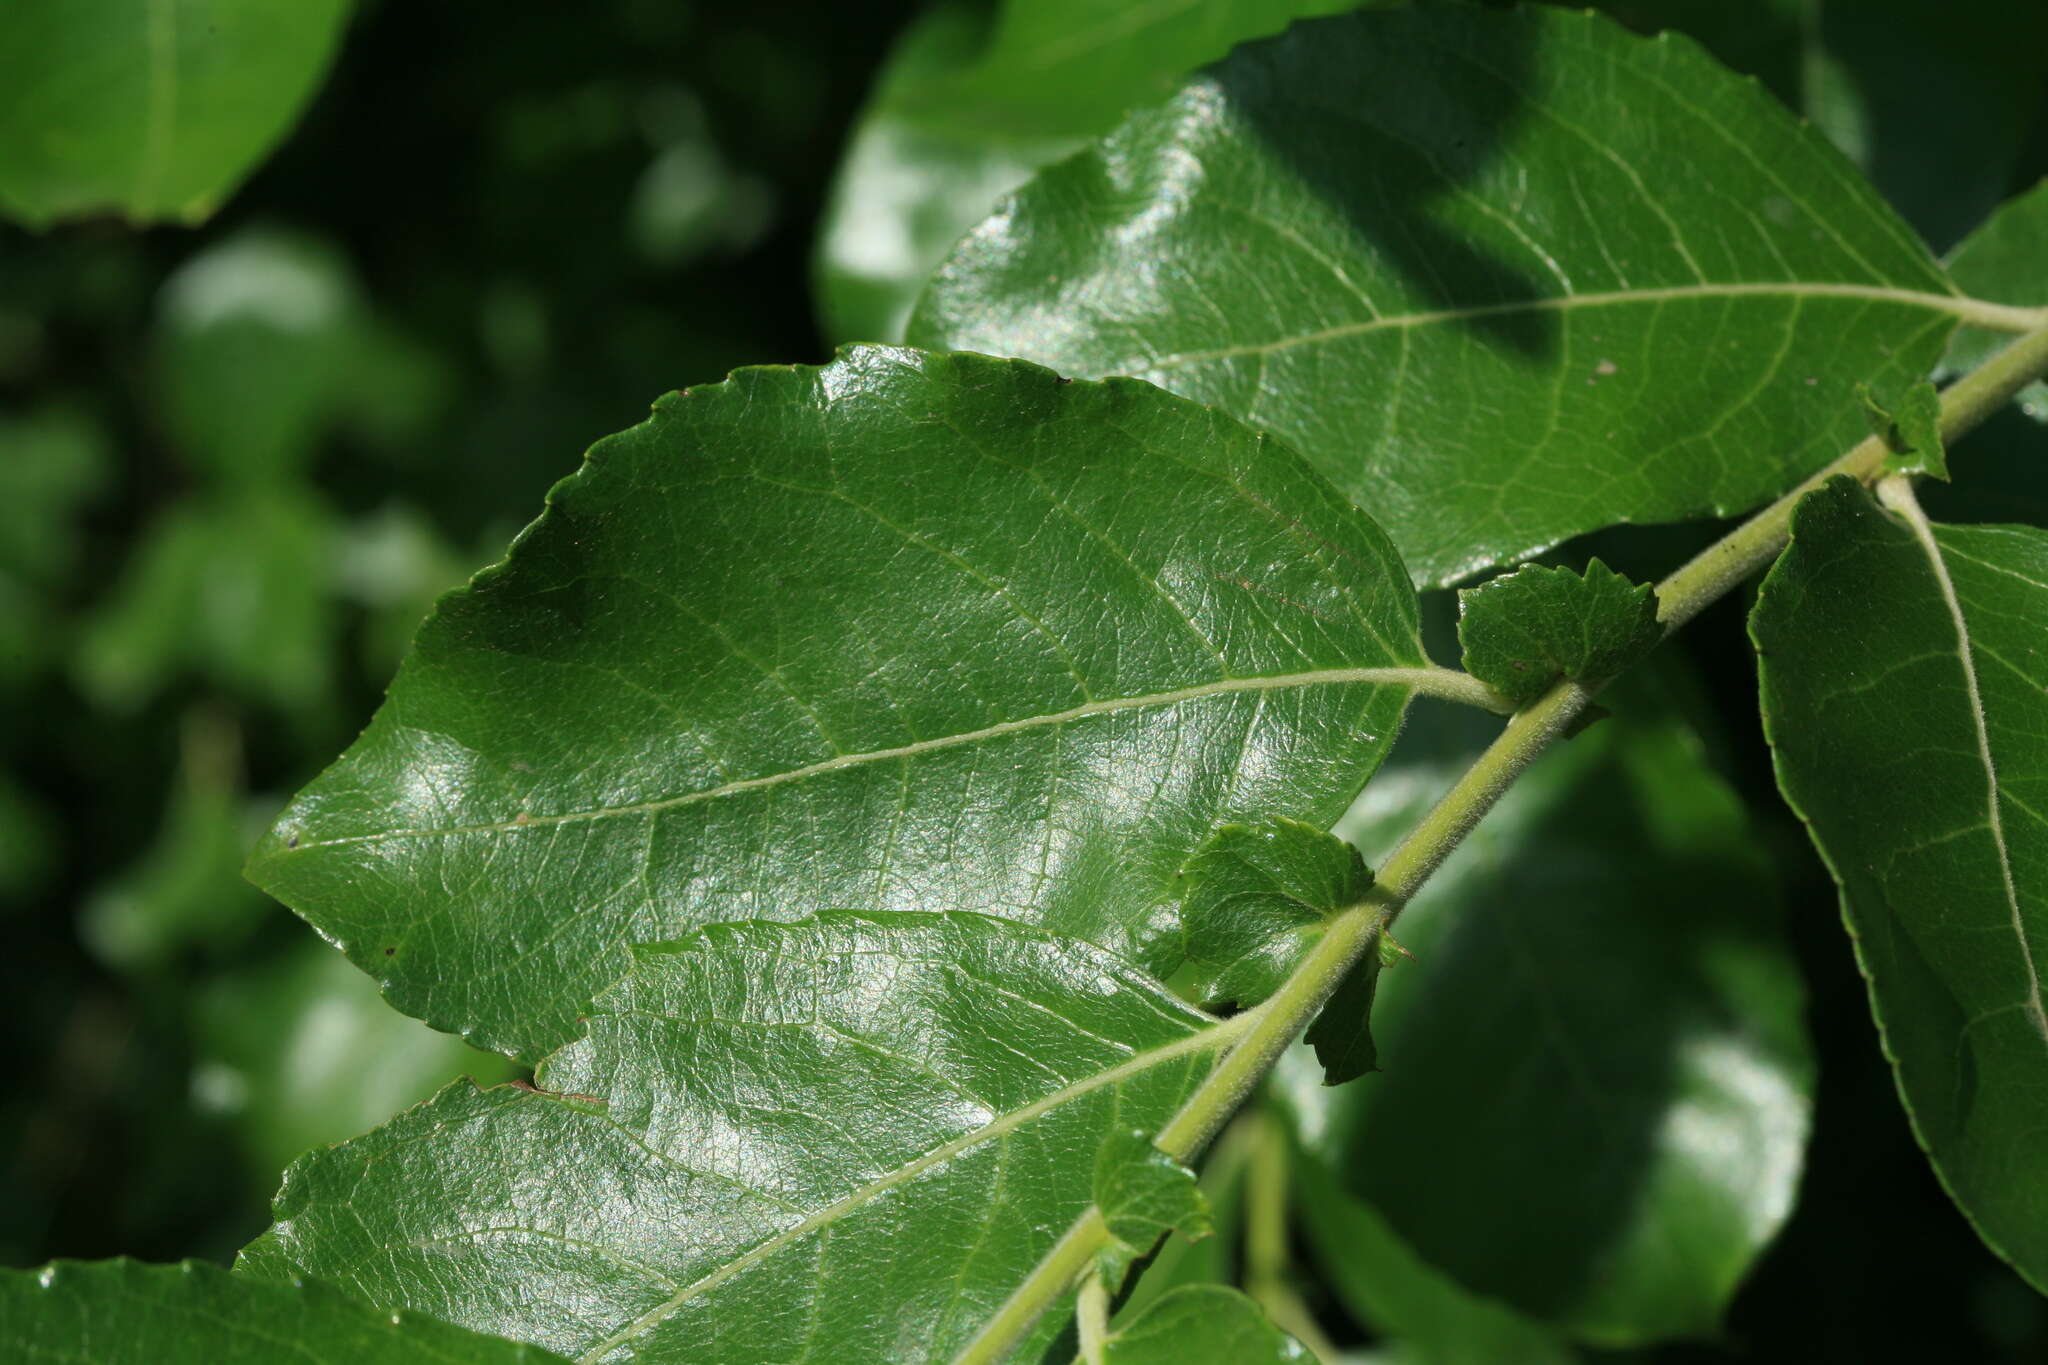 Image de Salix pyrolifolia Ledeb.